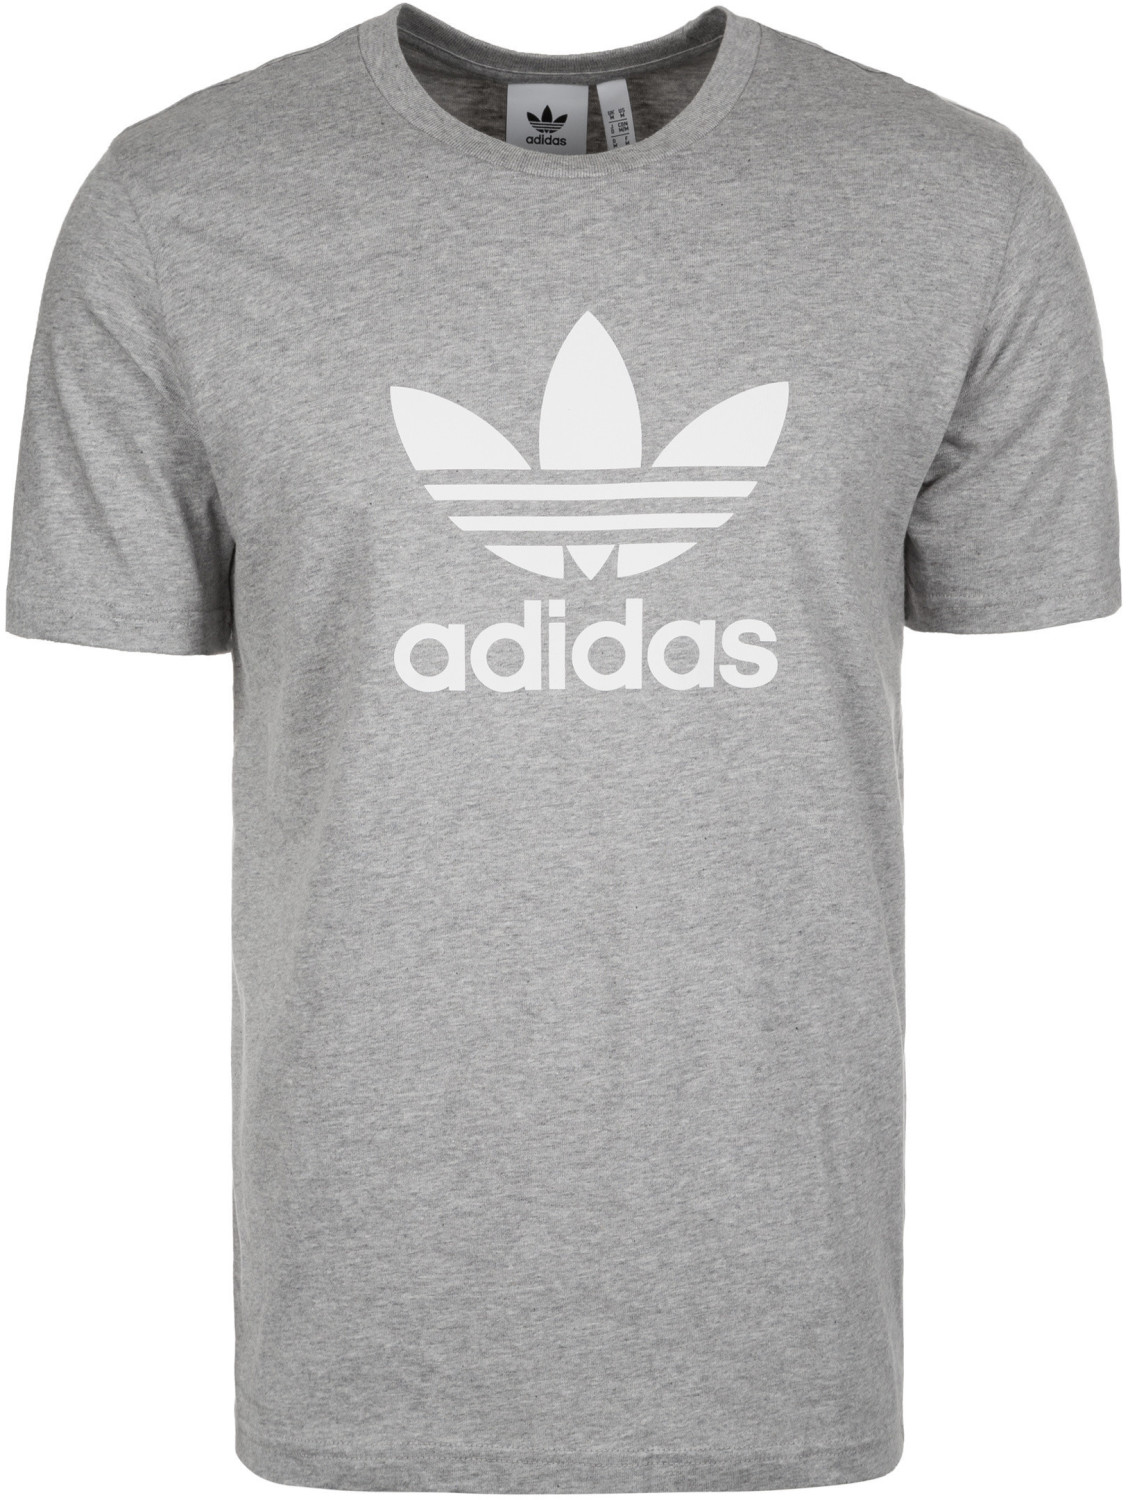 Adidas Originals Trefoil T-Shirt medium grey heather